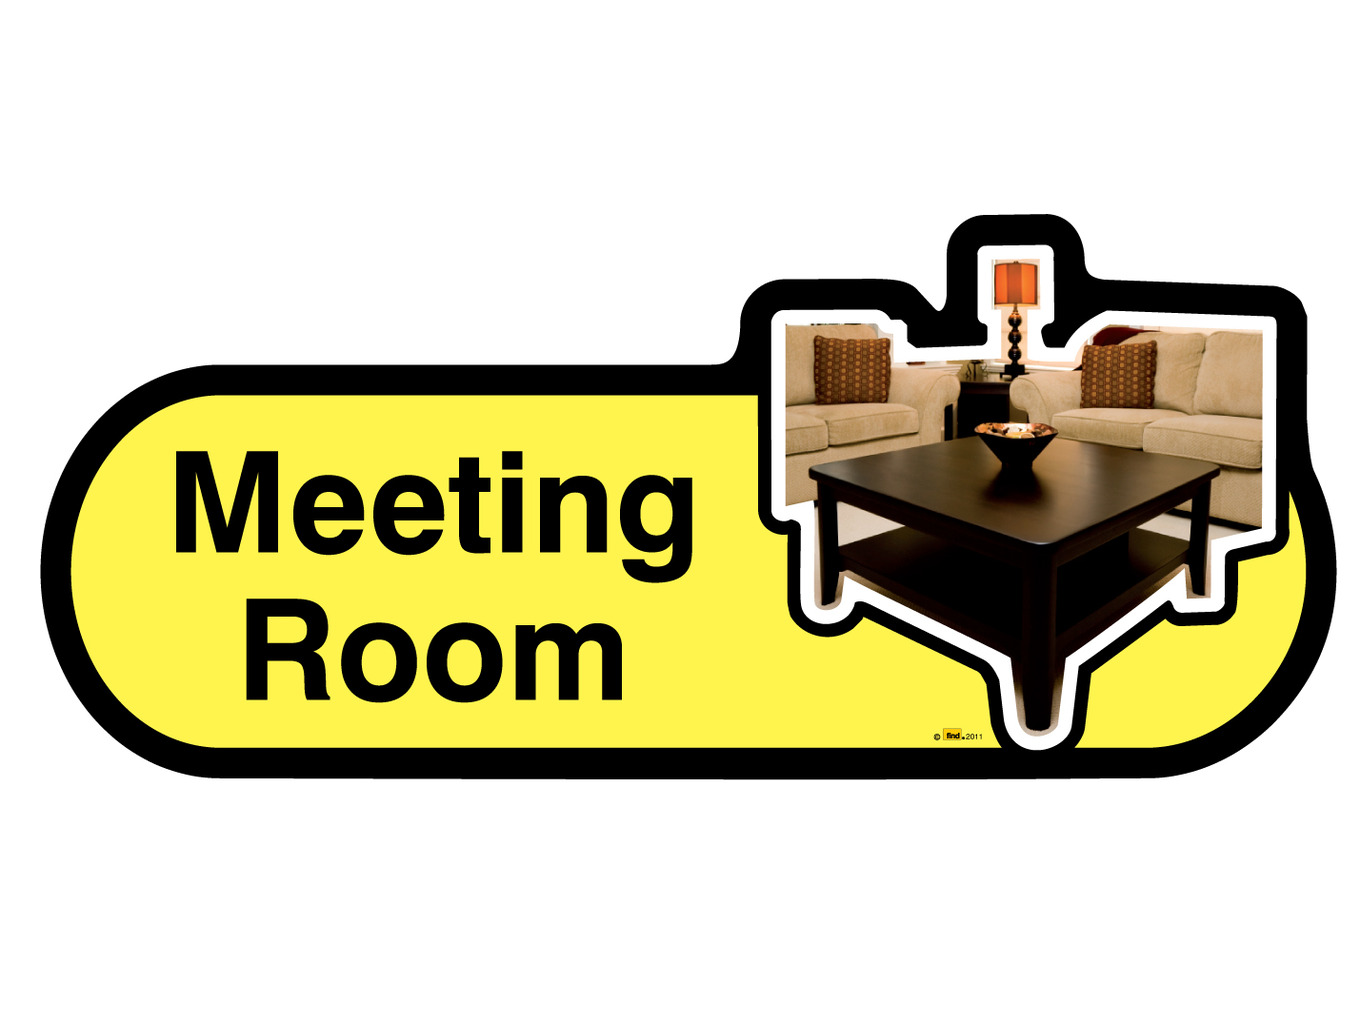 Meeting Room Sign Training 2 Care UK Ltd